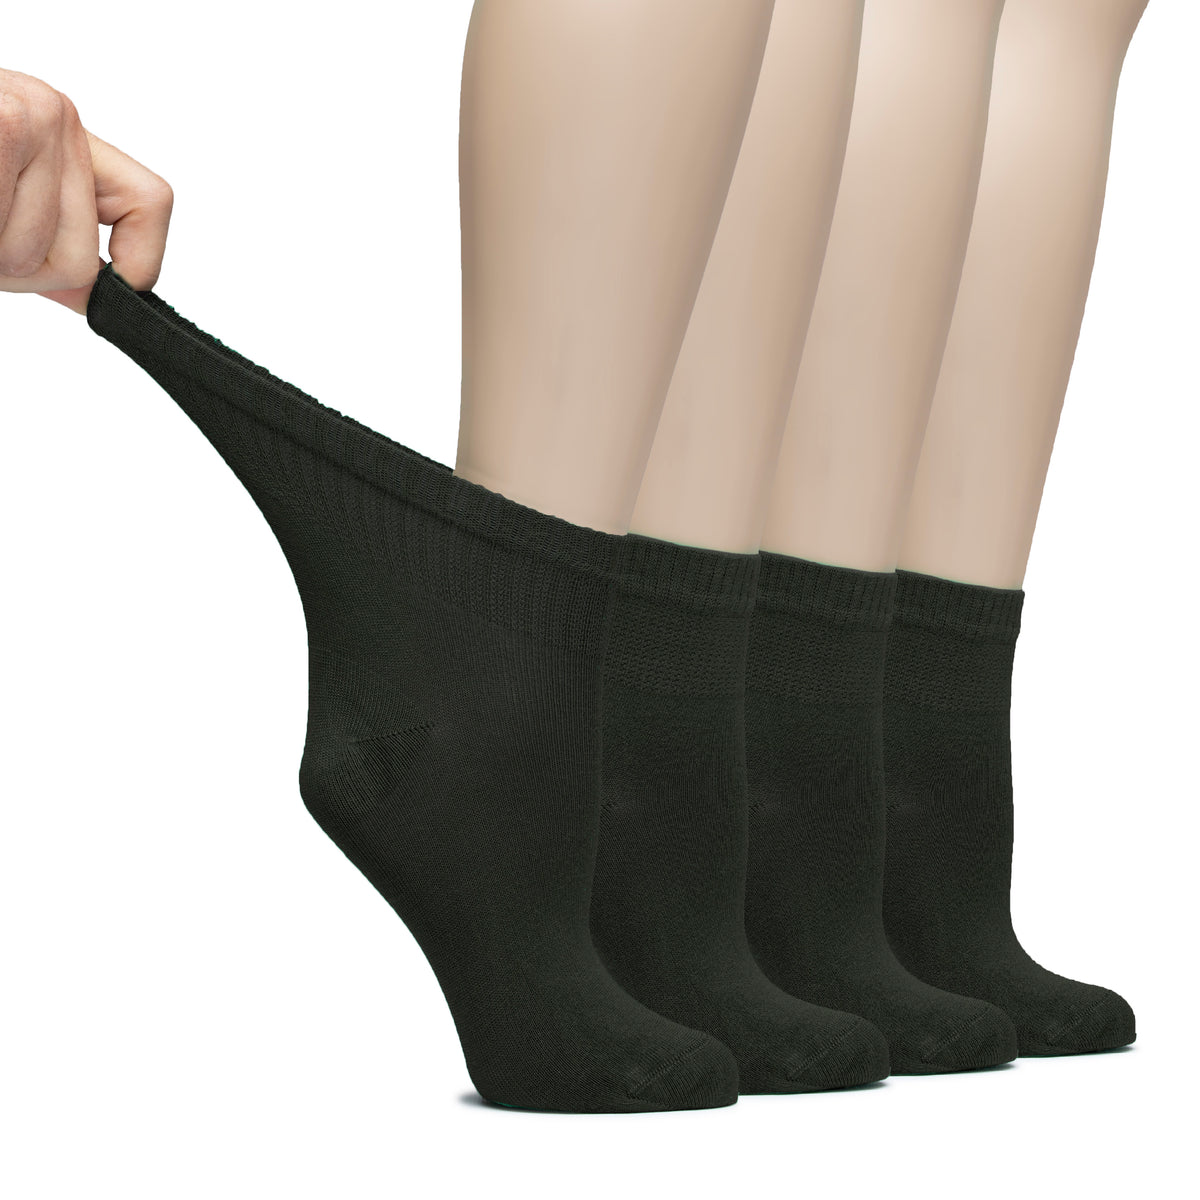 Hugh Ugoli Lightweight Women's Diabetic Ankle Socks Bamboo Thin Socks Seamless Toe and Non-Binding Top, 4 Pairs, , Shoe Size: 6-9/10-12 | Shoe Size: 10-12 | Dark Forest Green